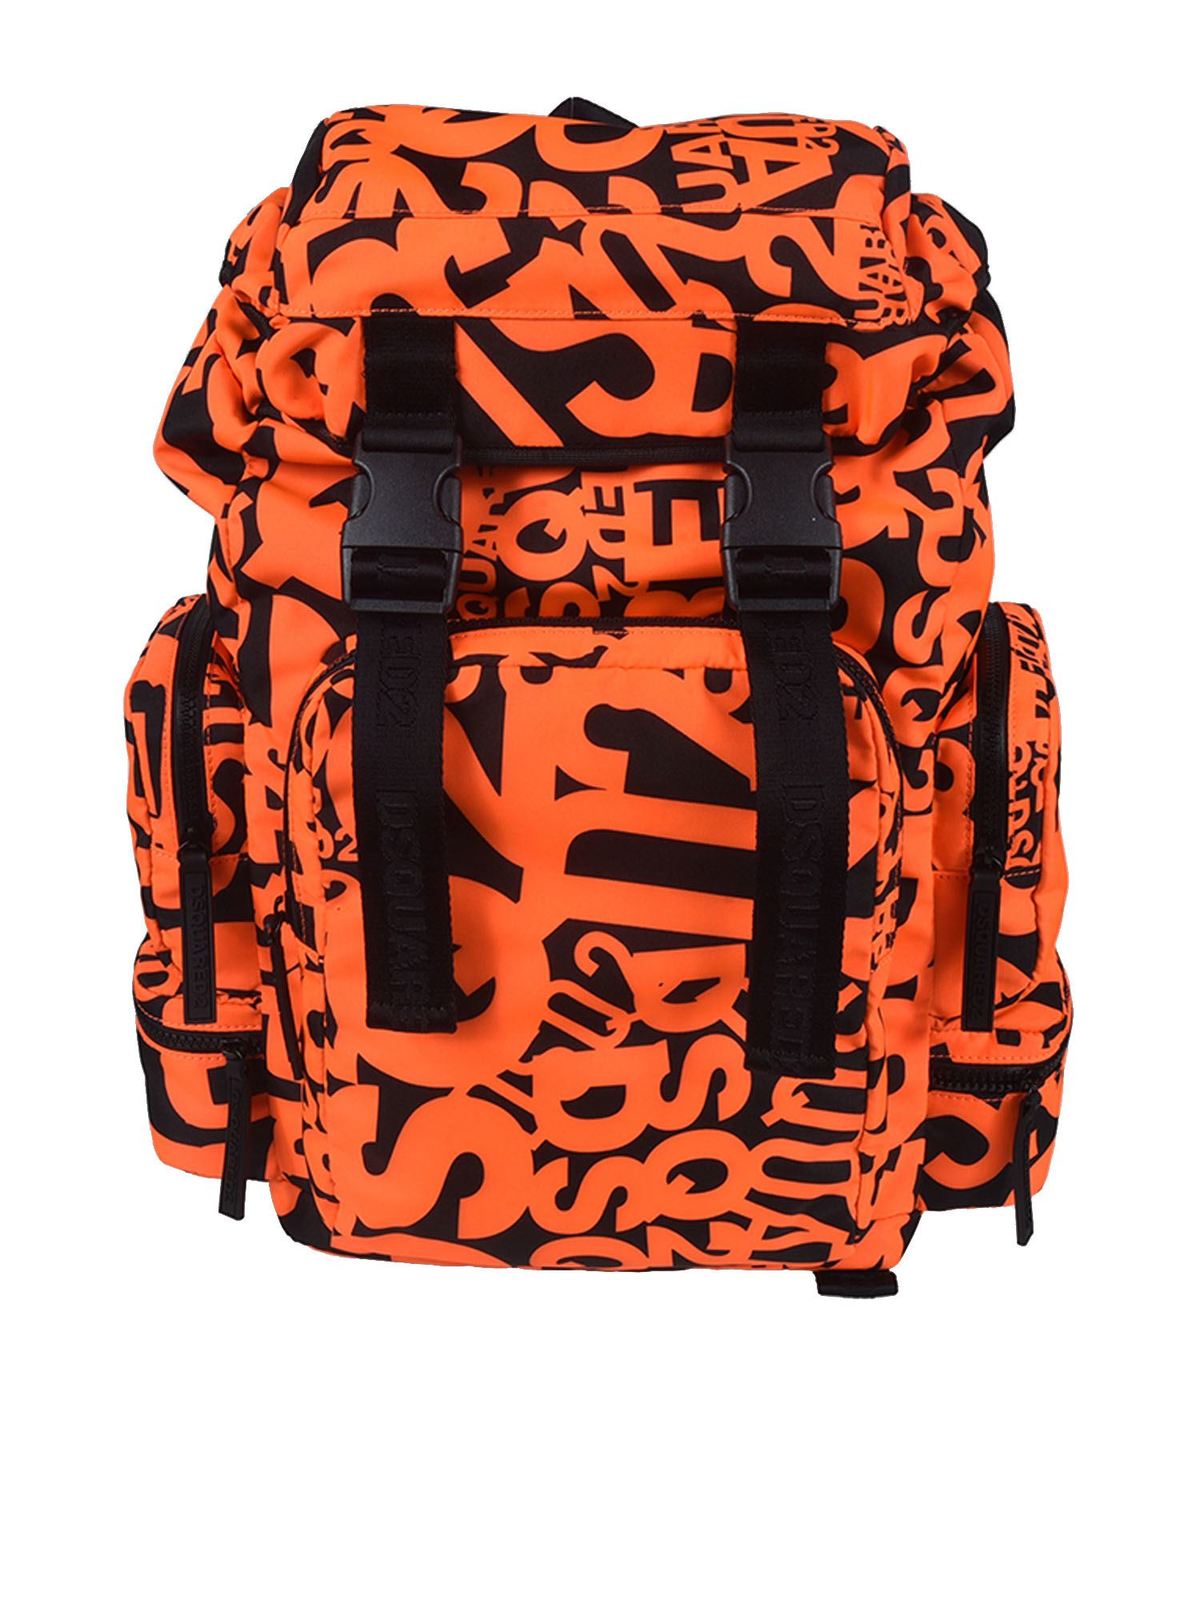 Backpacks Dsquared2 - All-over logo backpack in orange and black